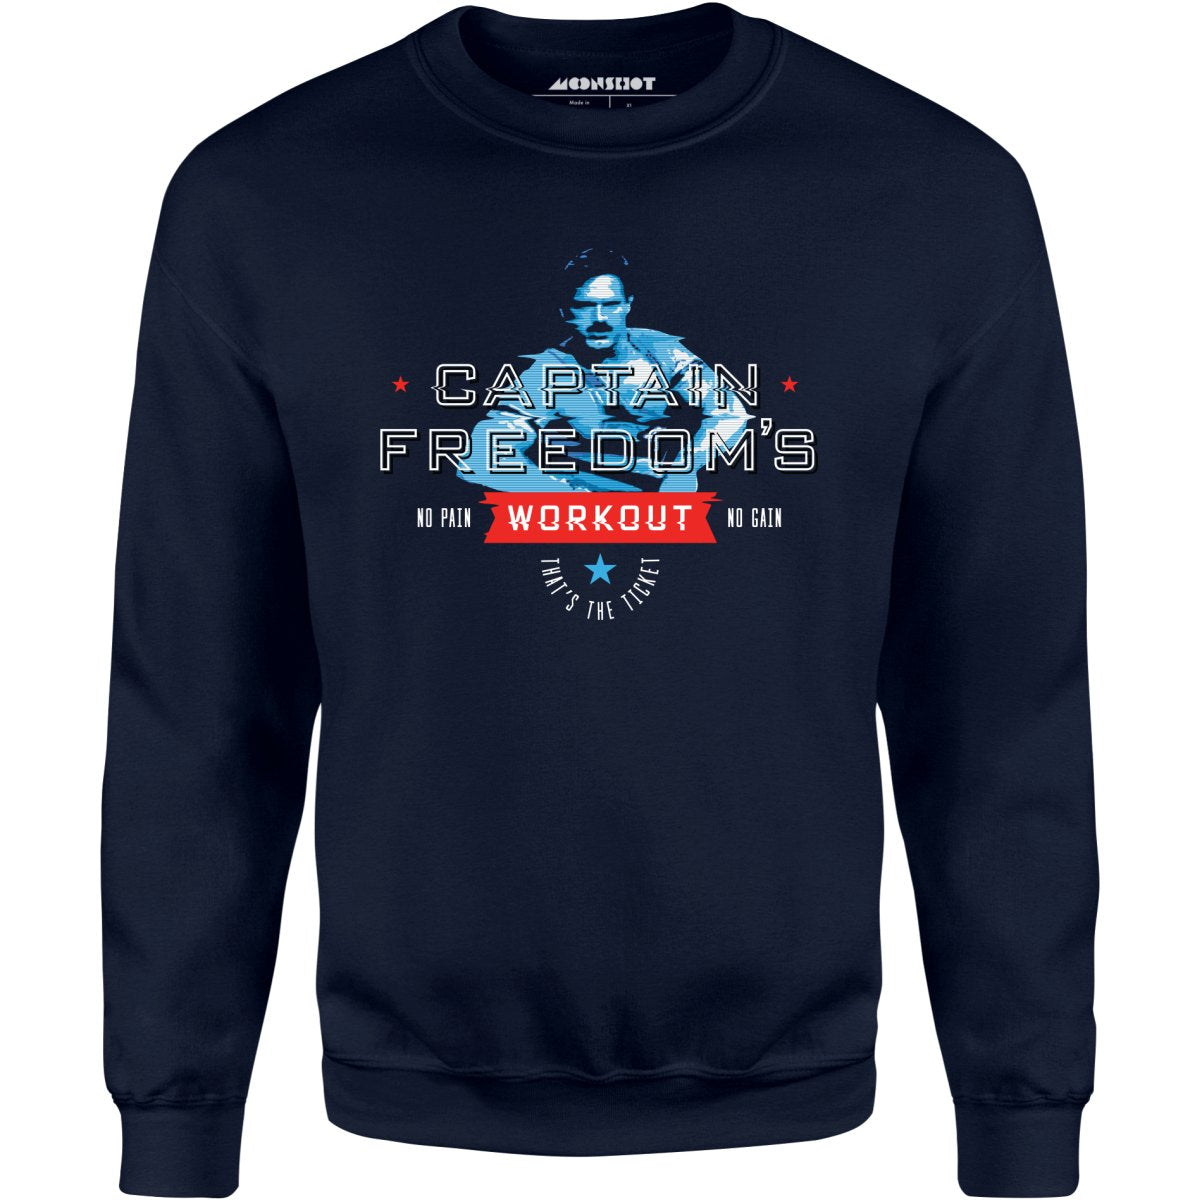 Running Man - Captain Freedom's Workout - Unisex Sweatshirt